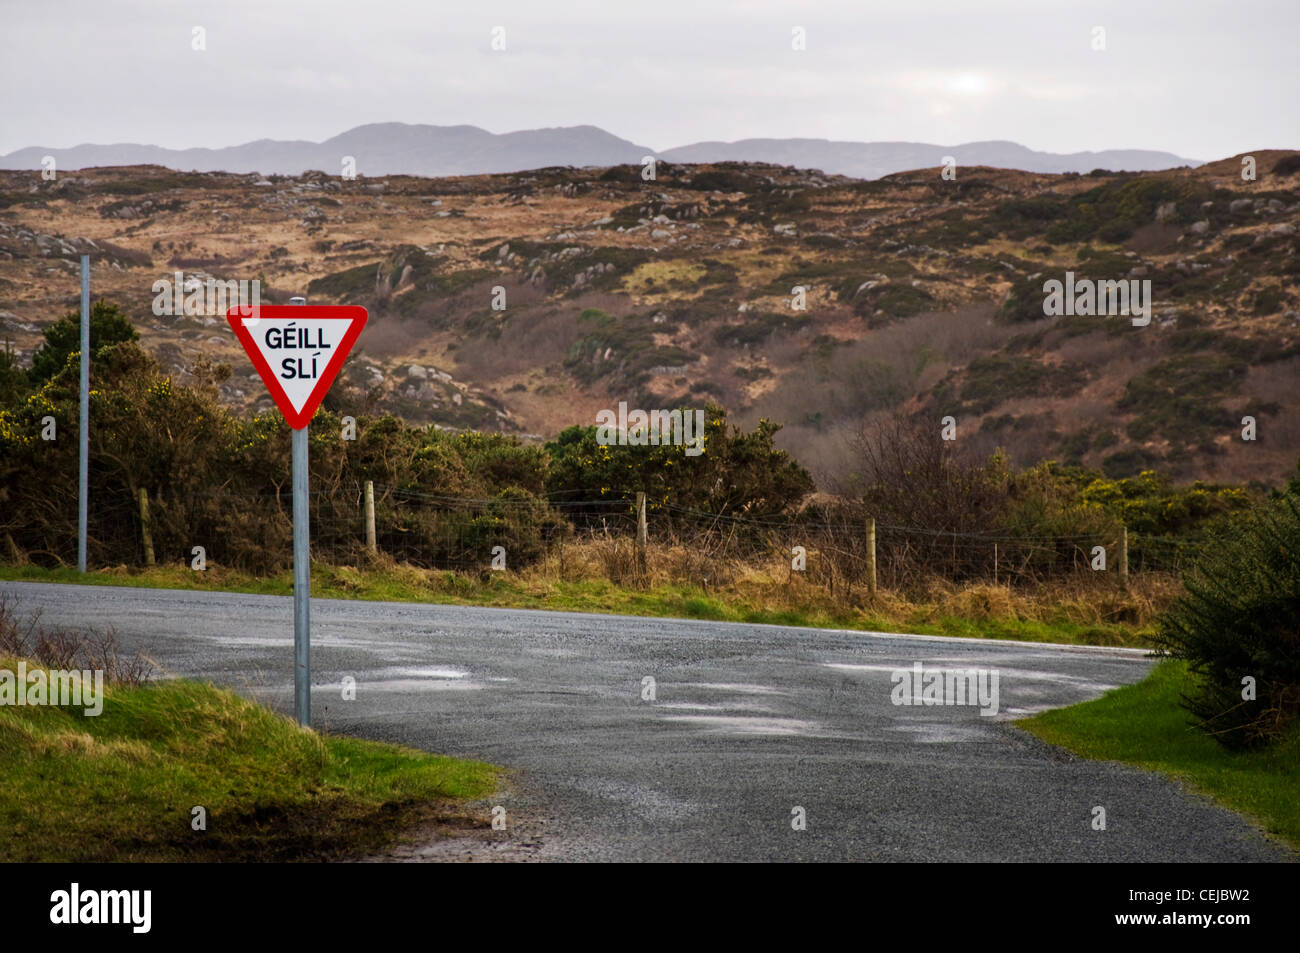 Gaeltacht roadsign in Gaelic Irish language region meaning Give Way Stock Photo